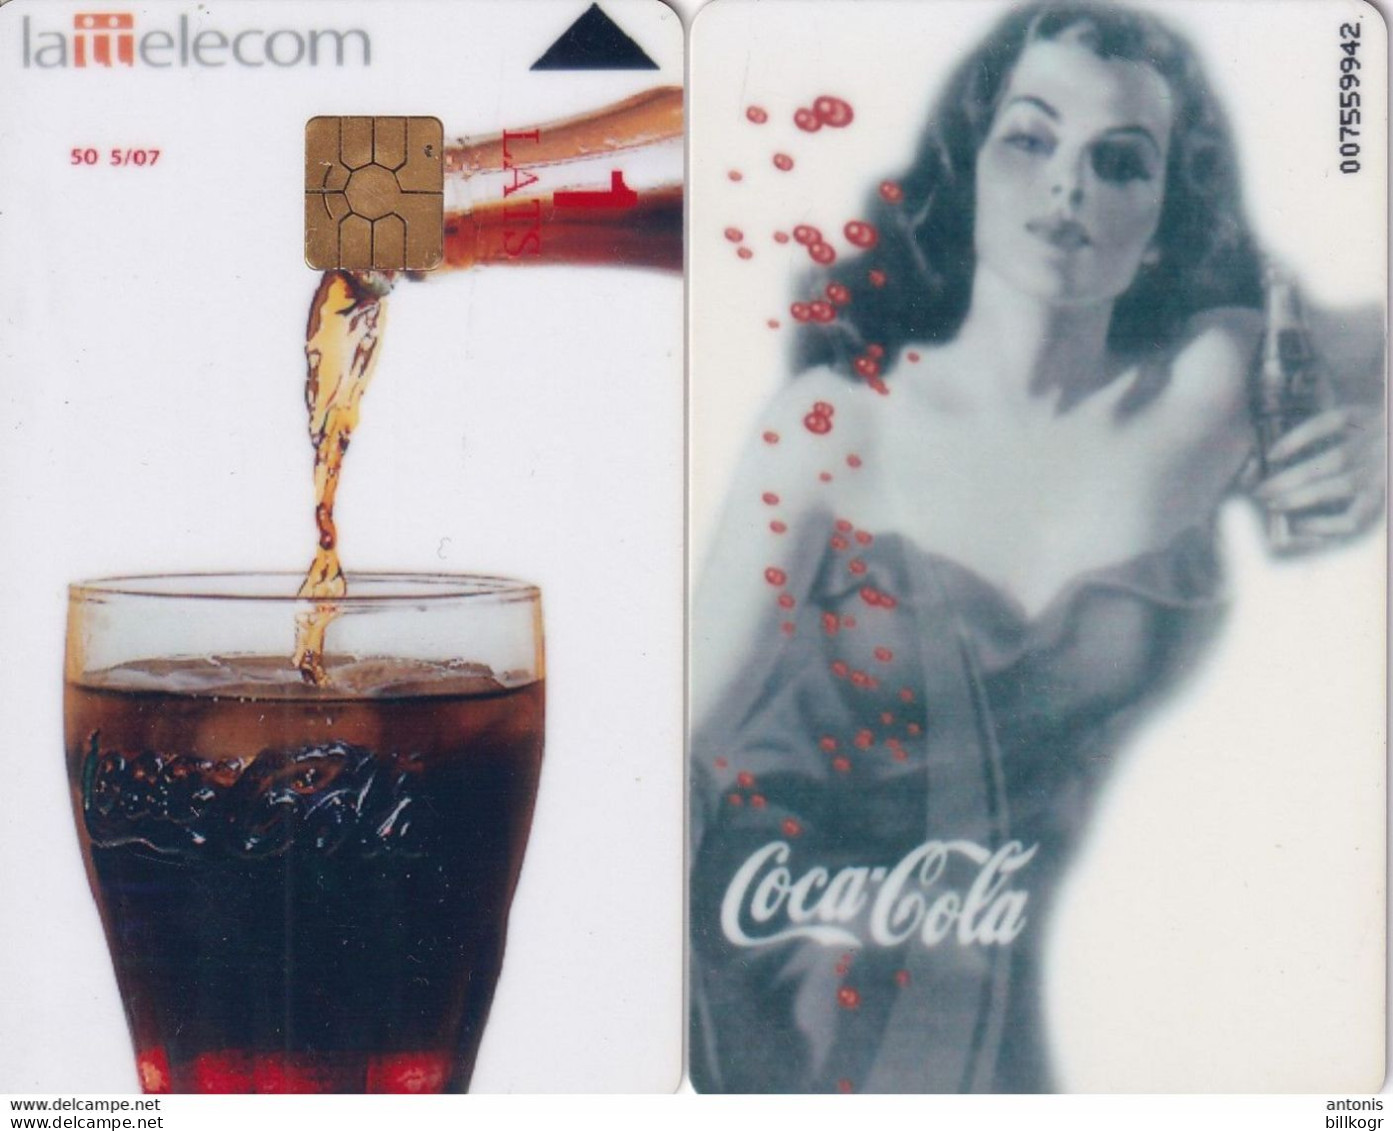 LATVIA - Coca Cola, Tirage %50, 05/07, Mint - Letonia